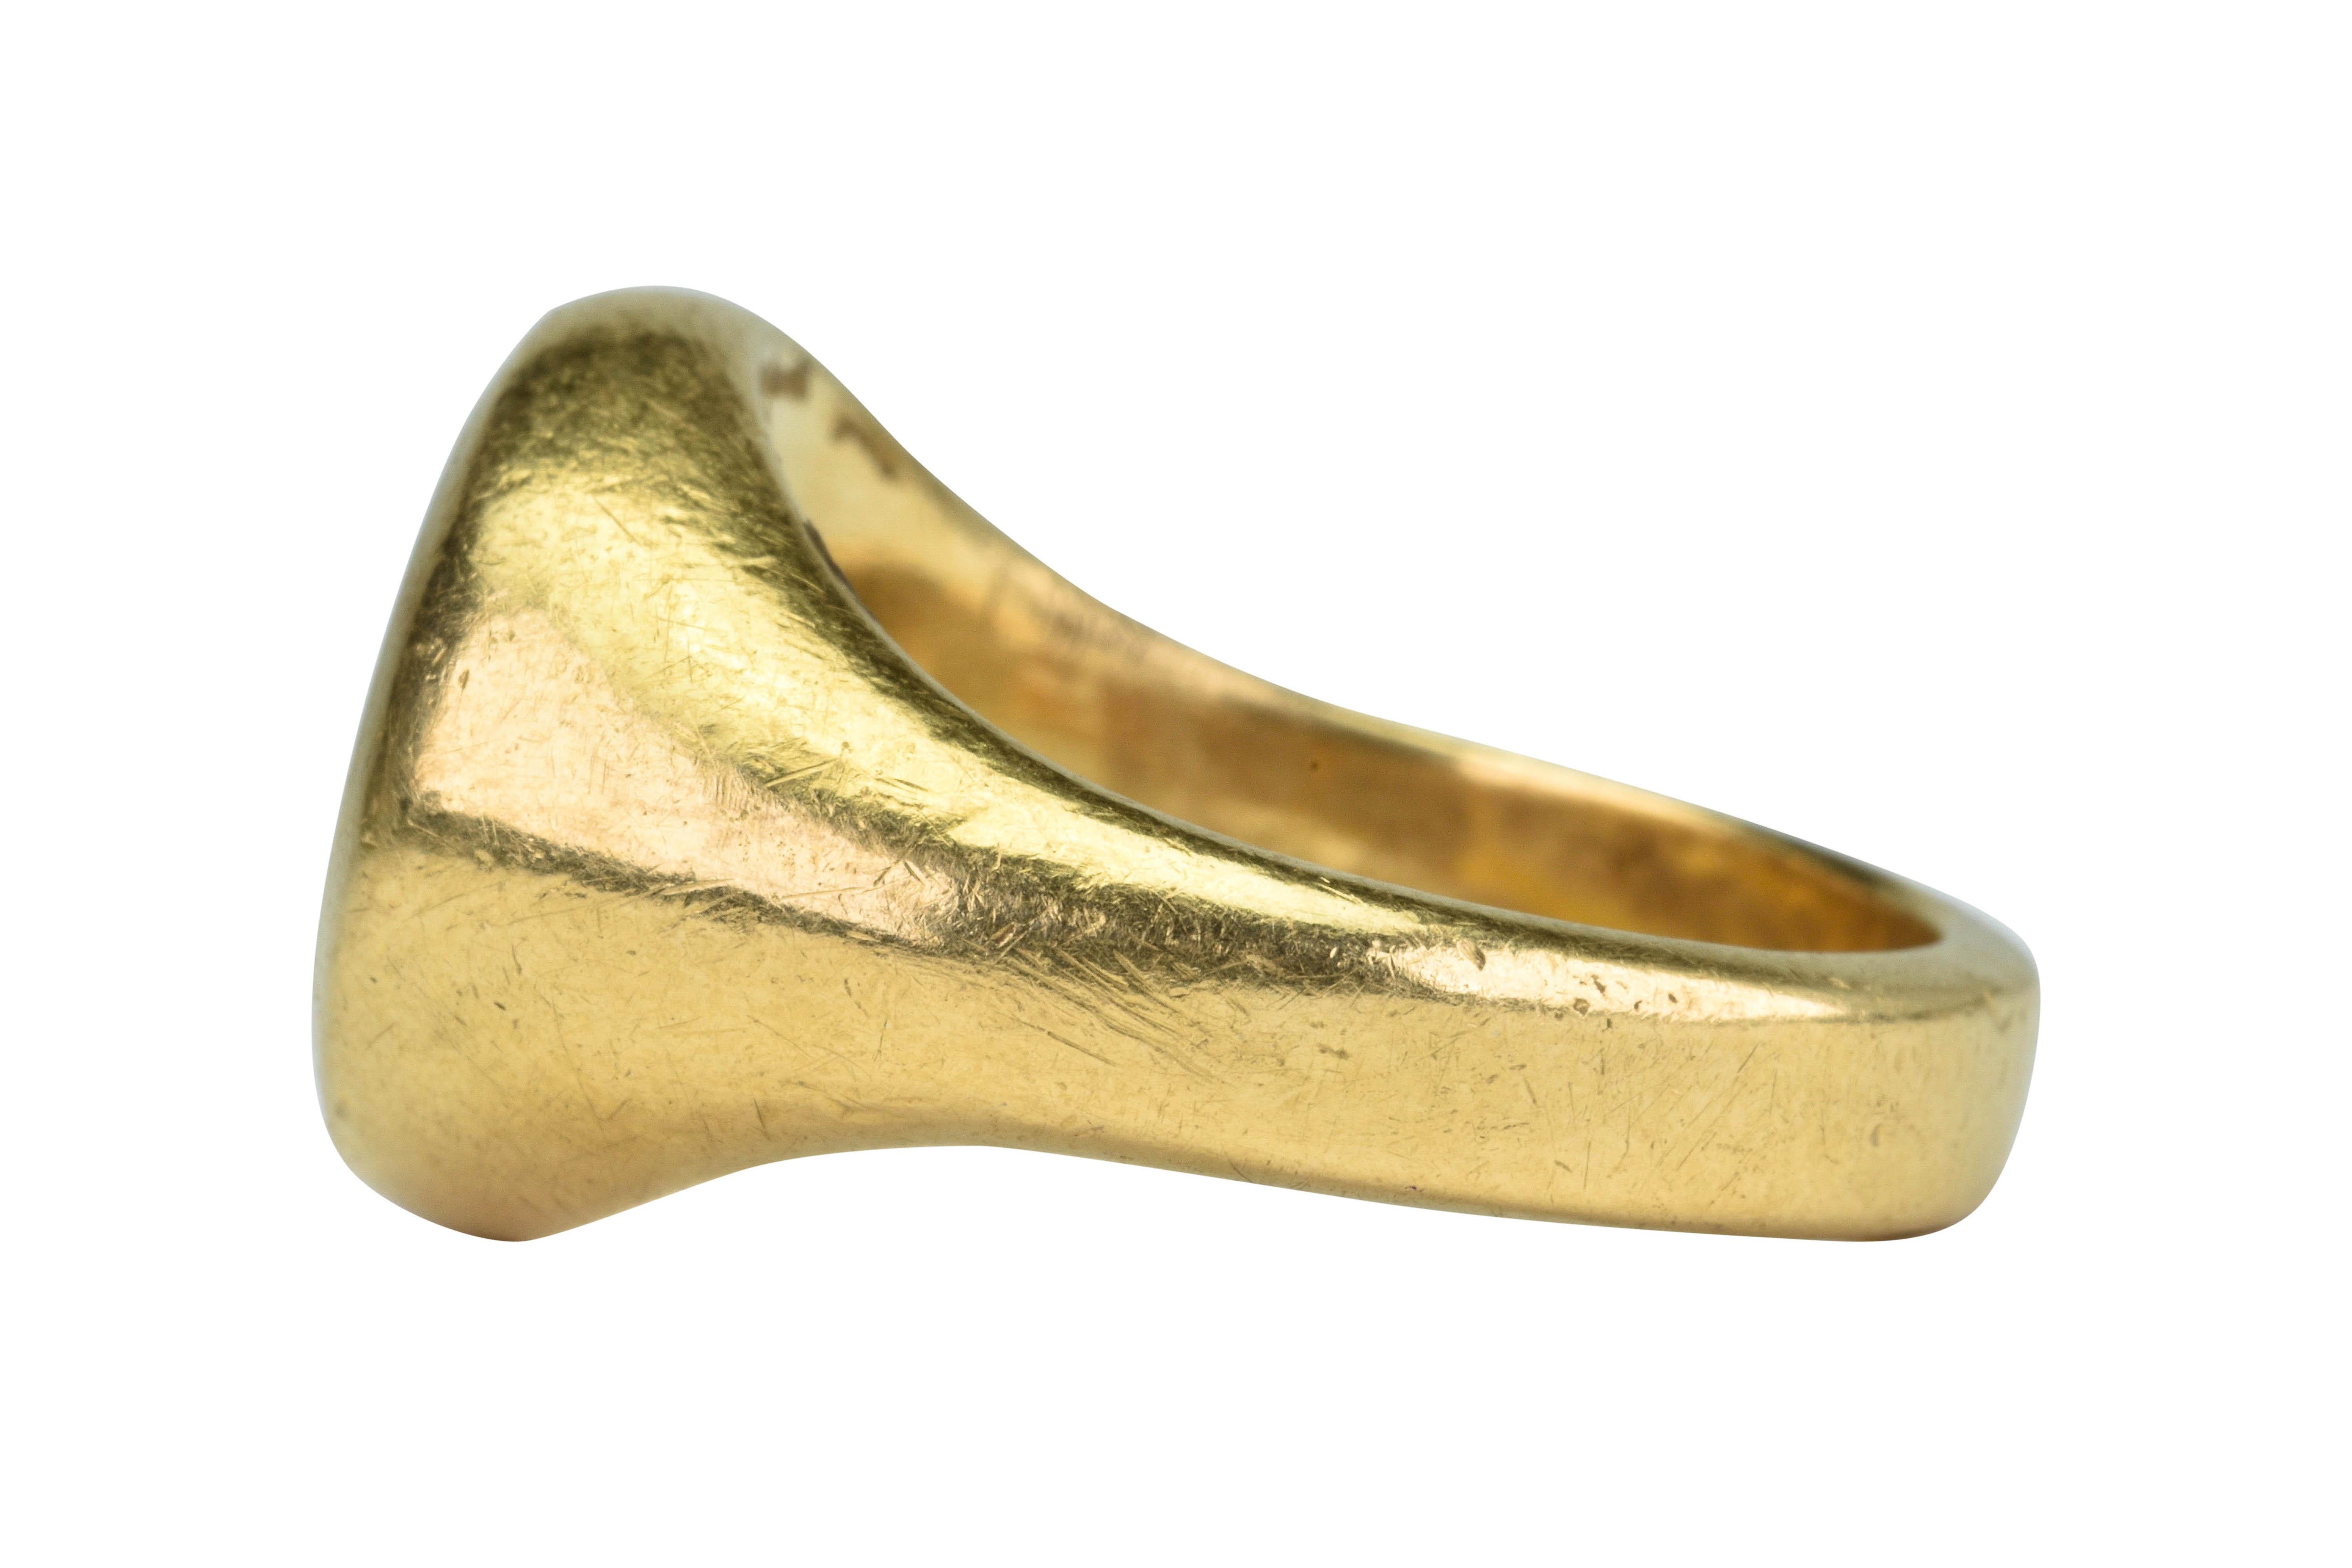 gold roman ring